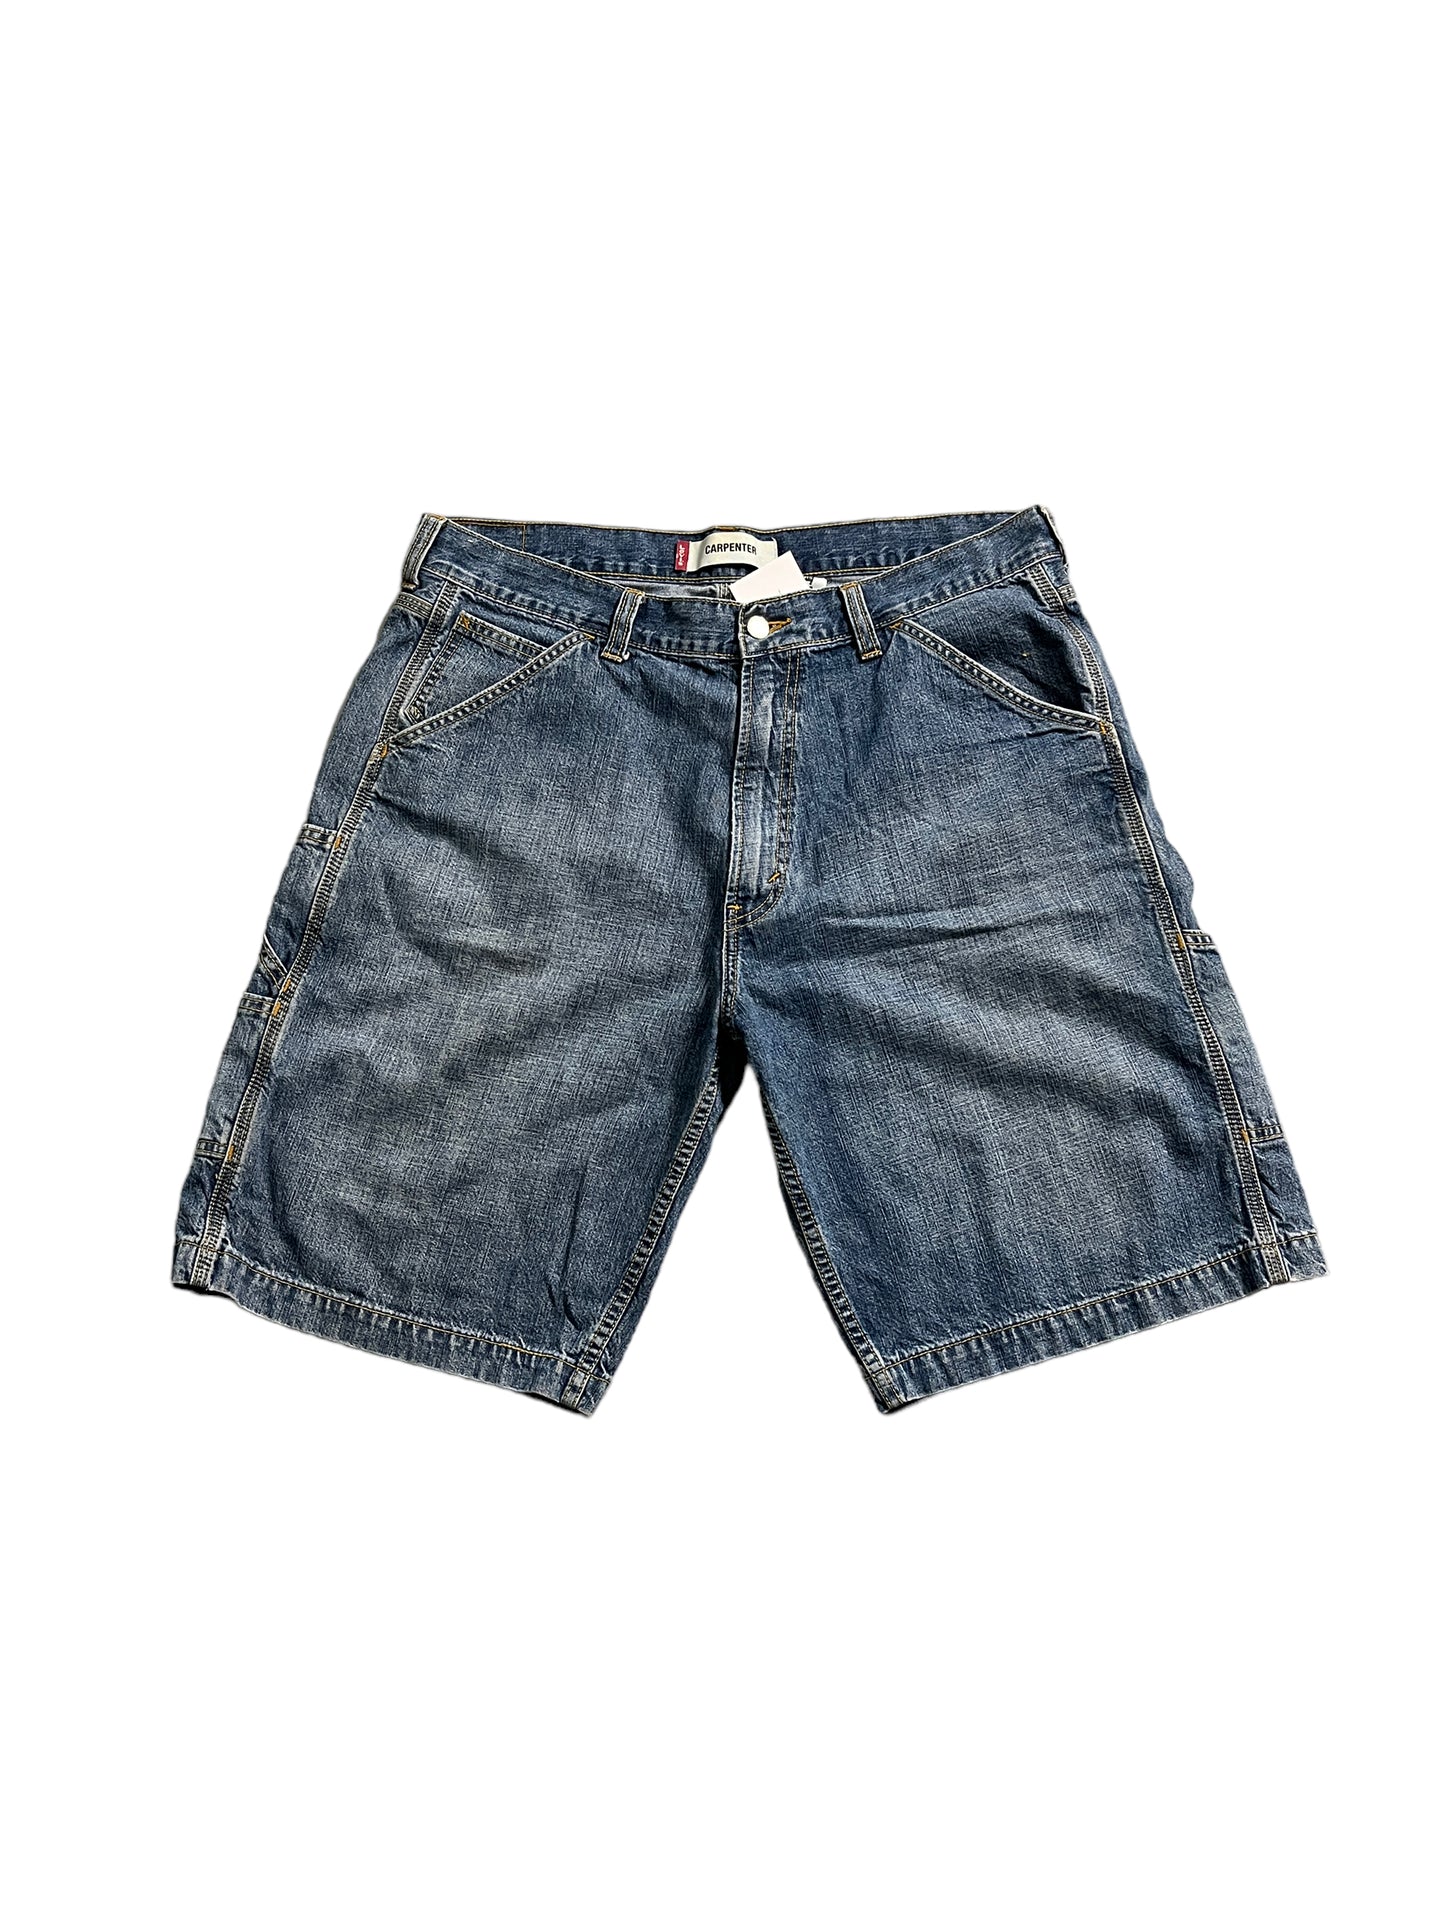 Vintage Levi's Carpenter Jean Shorts